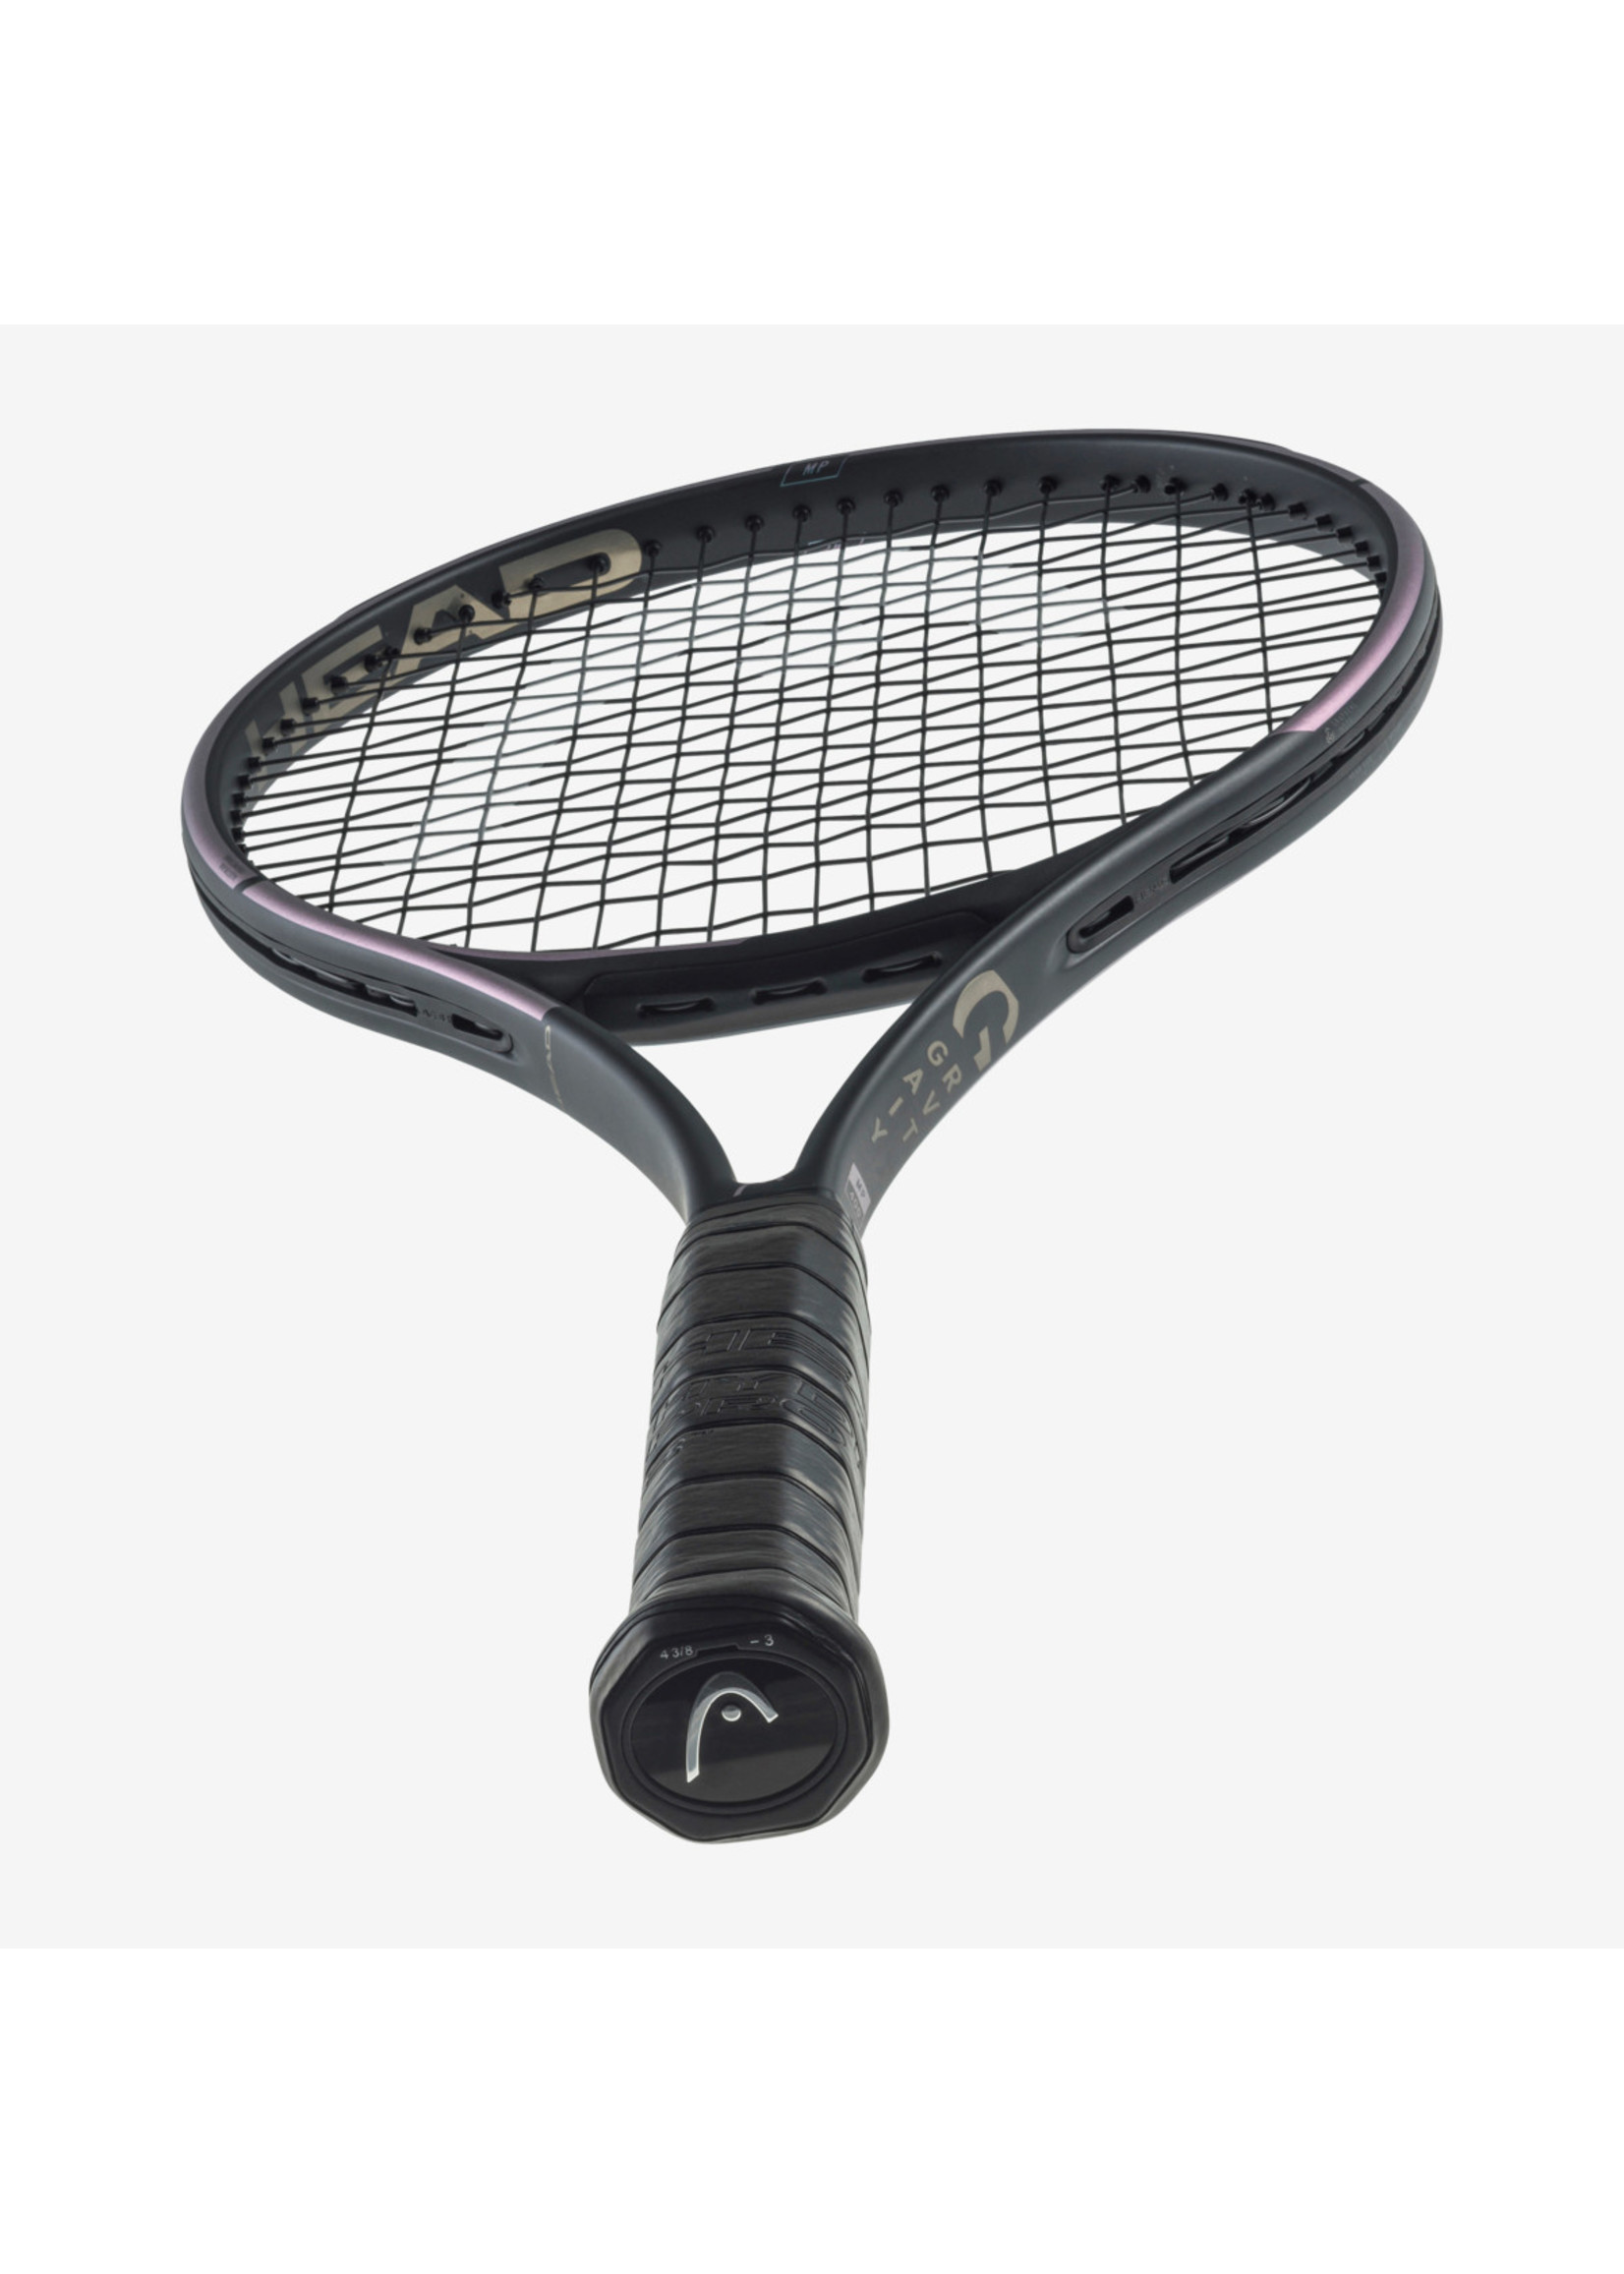 Head Head Gravity MP Tennis Racket (2023)